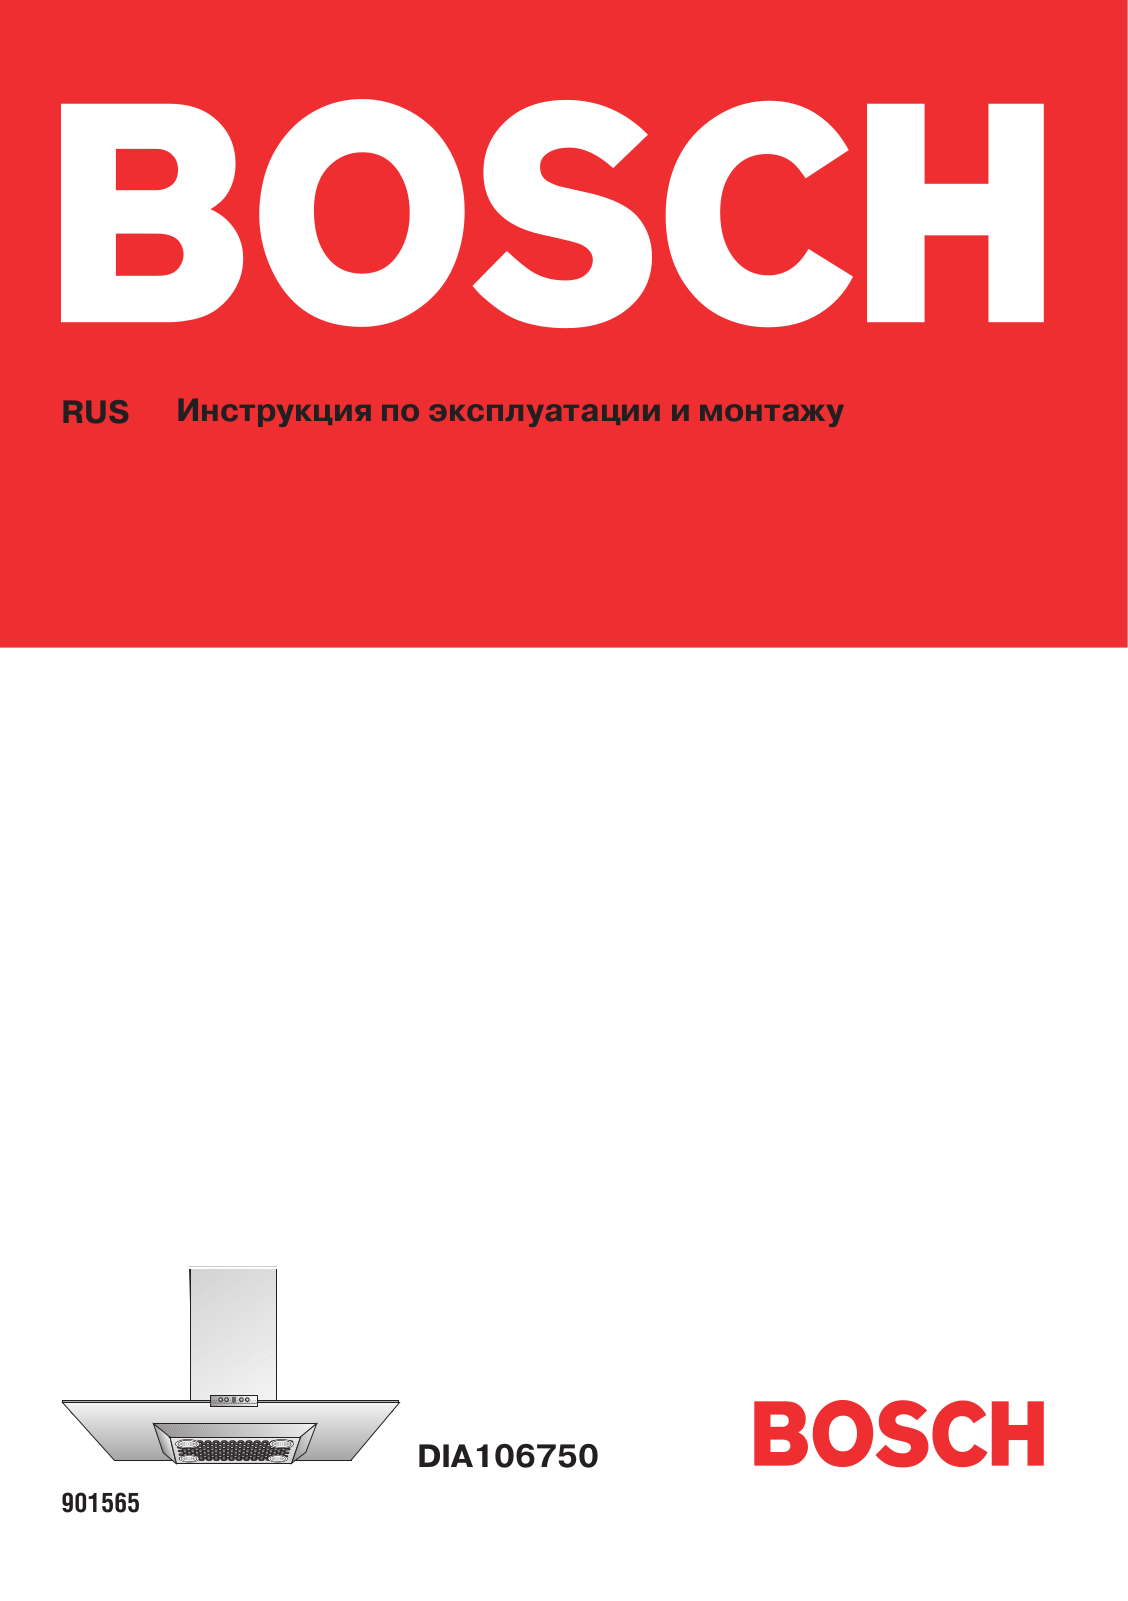 Bosch DIA 106750 User Manual